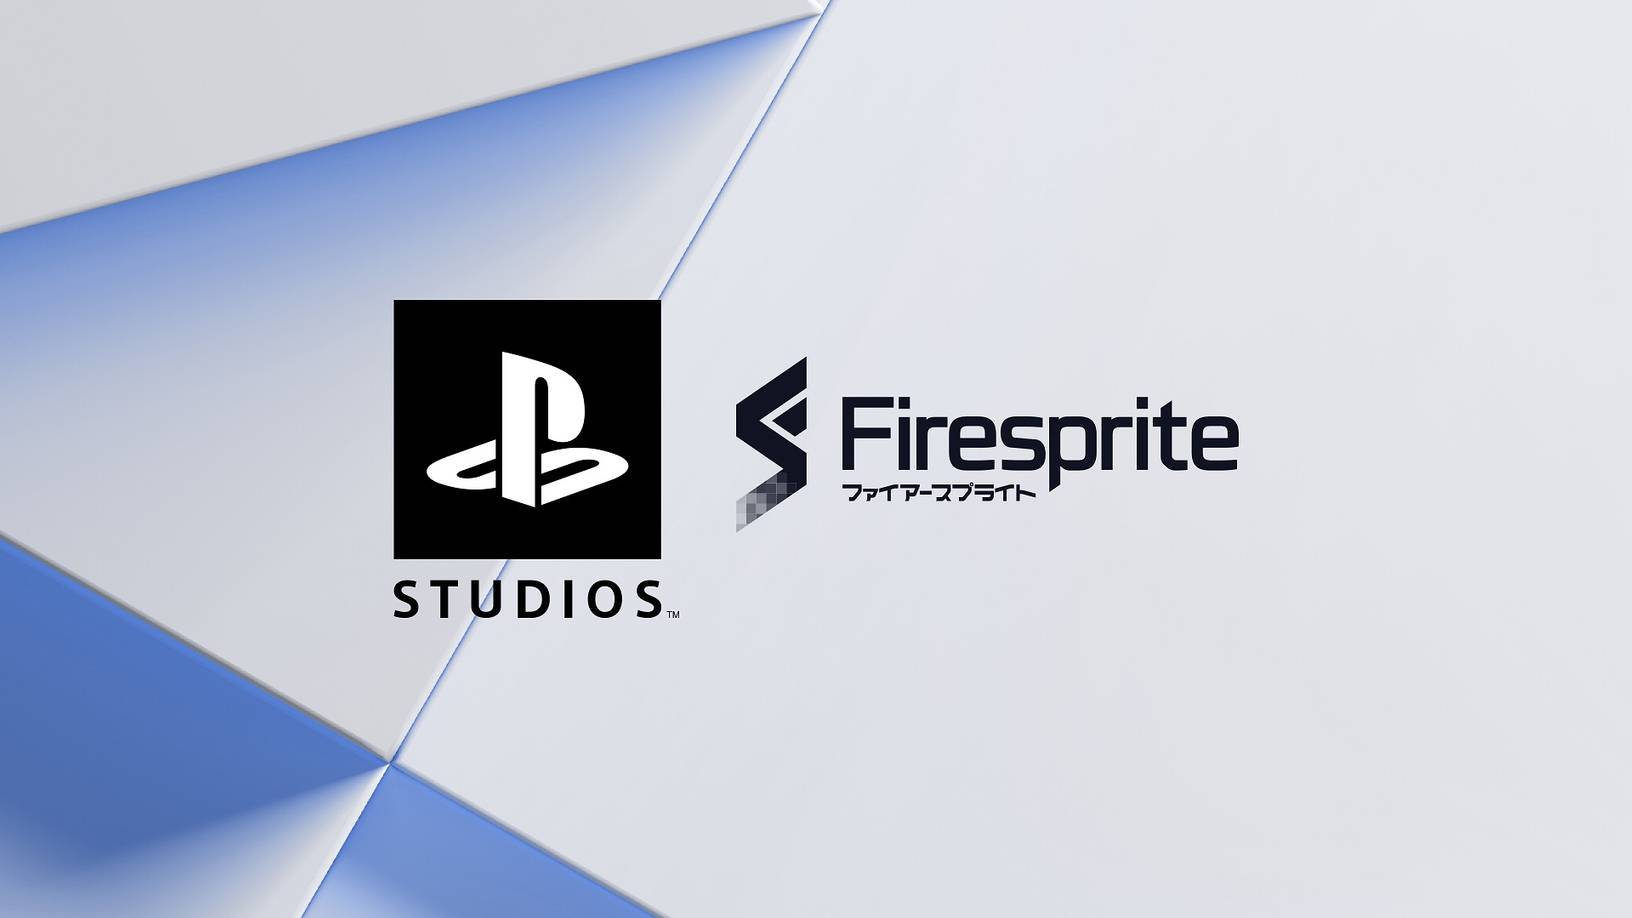 Firesprite e playstation studios anunciam parceria | c2b2ef46 firesprite | married games playstation studios | playstation studios | firesprite e playstation studios